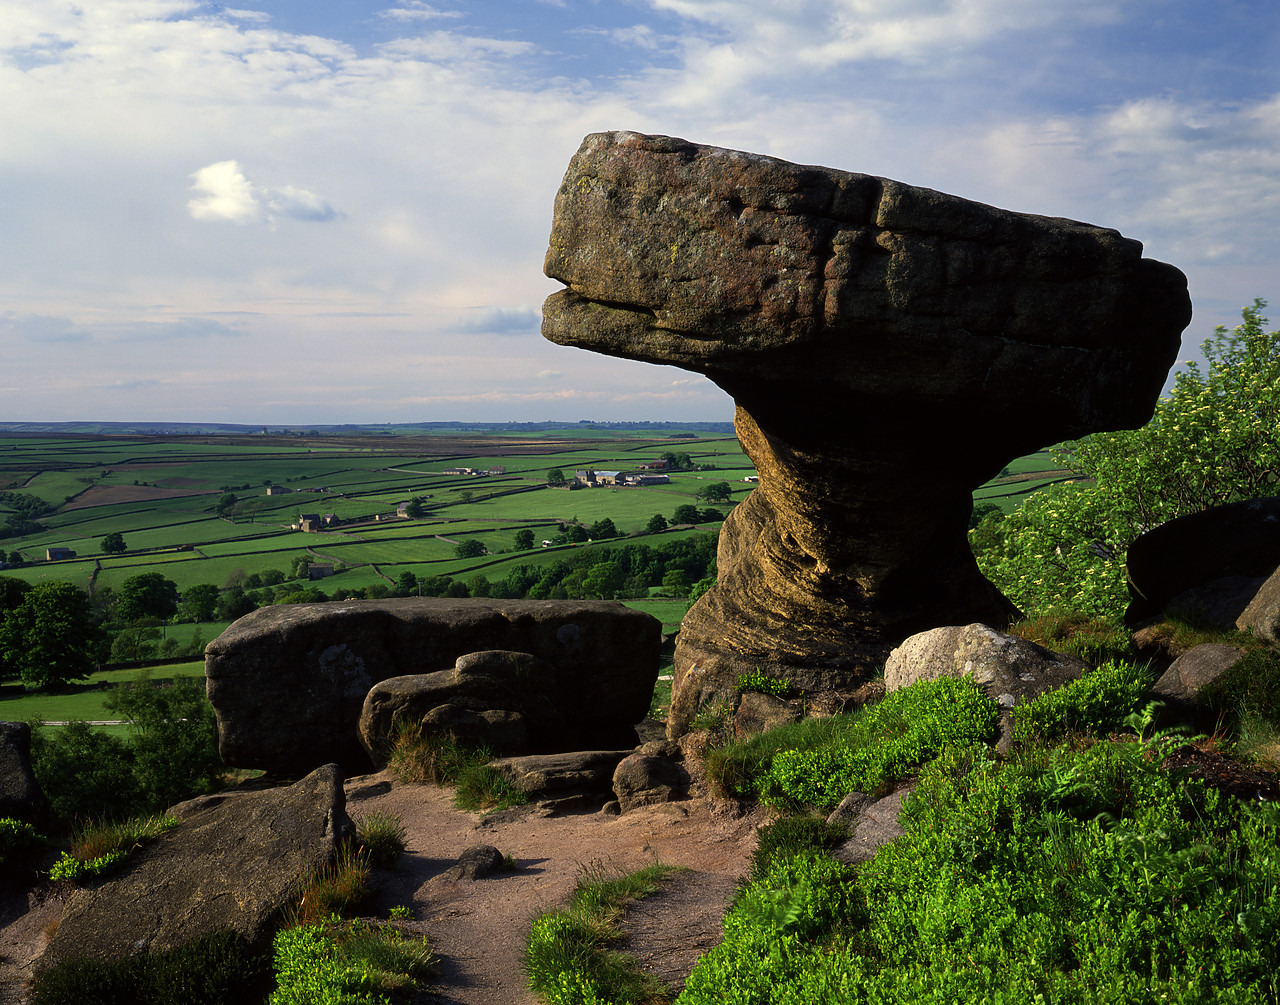 #892191-1 - "The Anvil", Brimham Rocks, Yorkshire, England